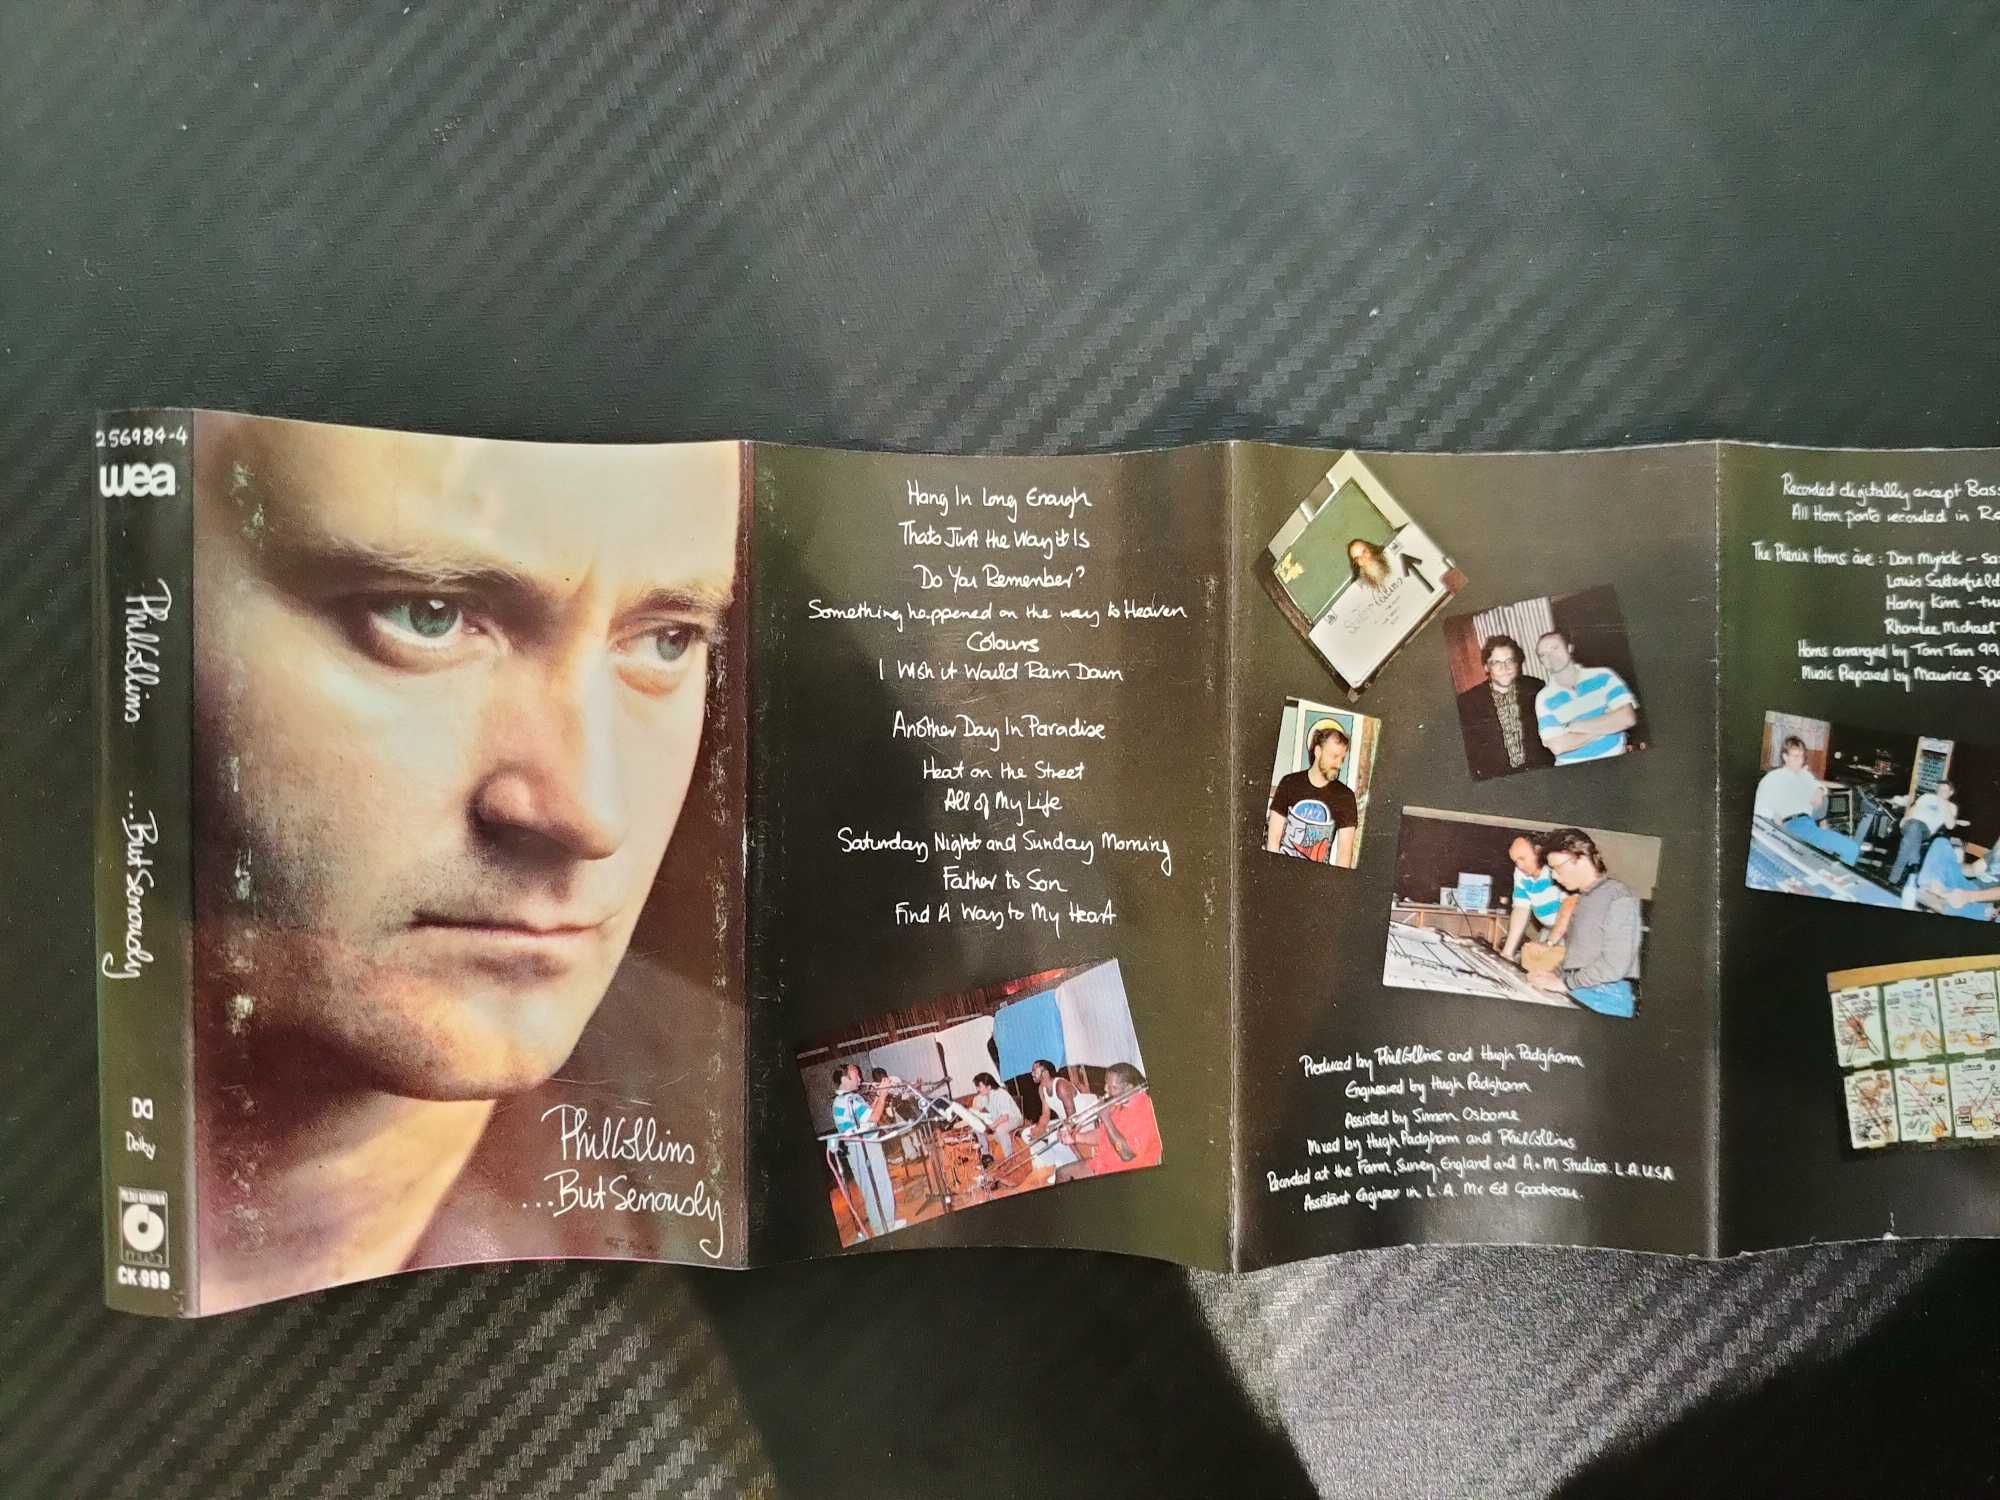 Phil Collins ...But Seriously - kaseta Audio